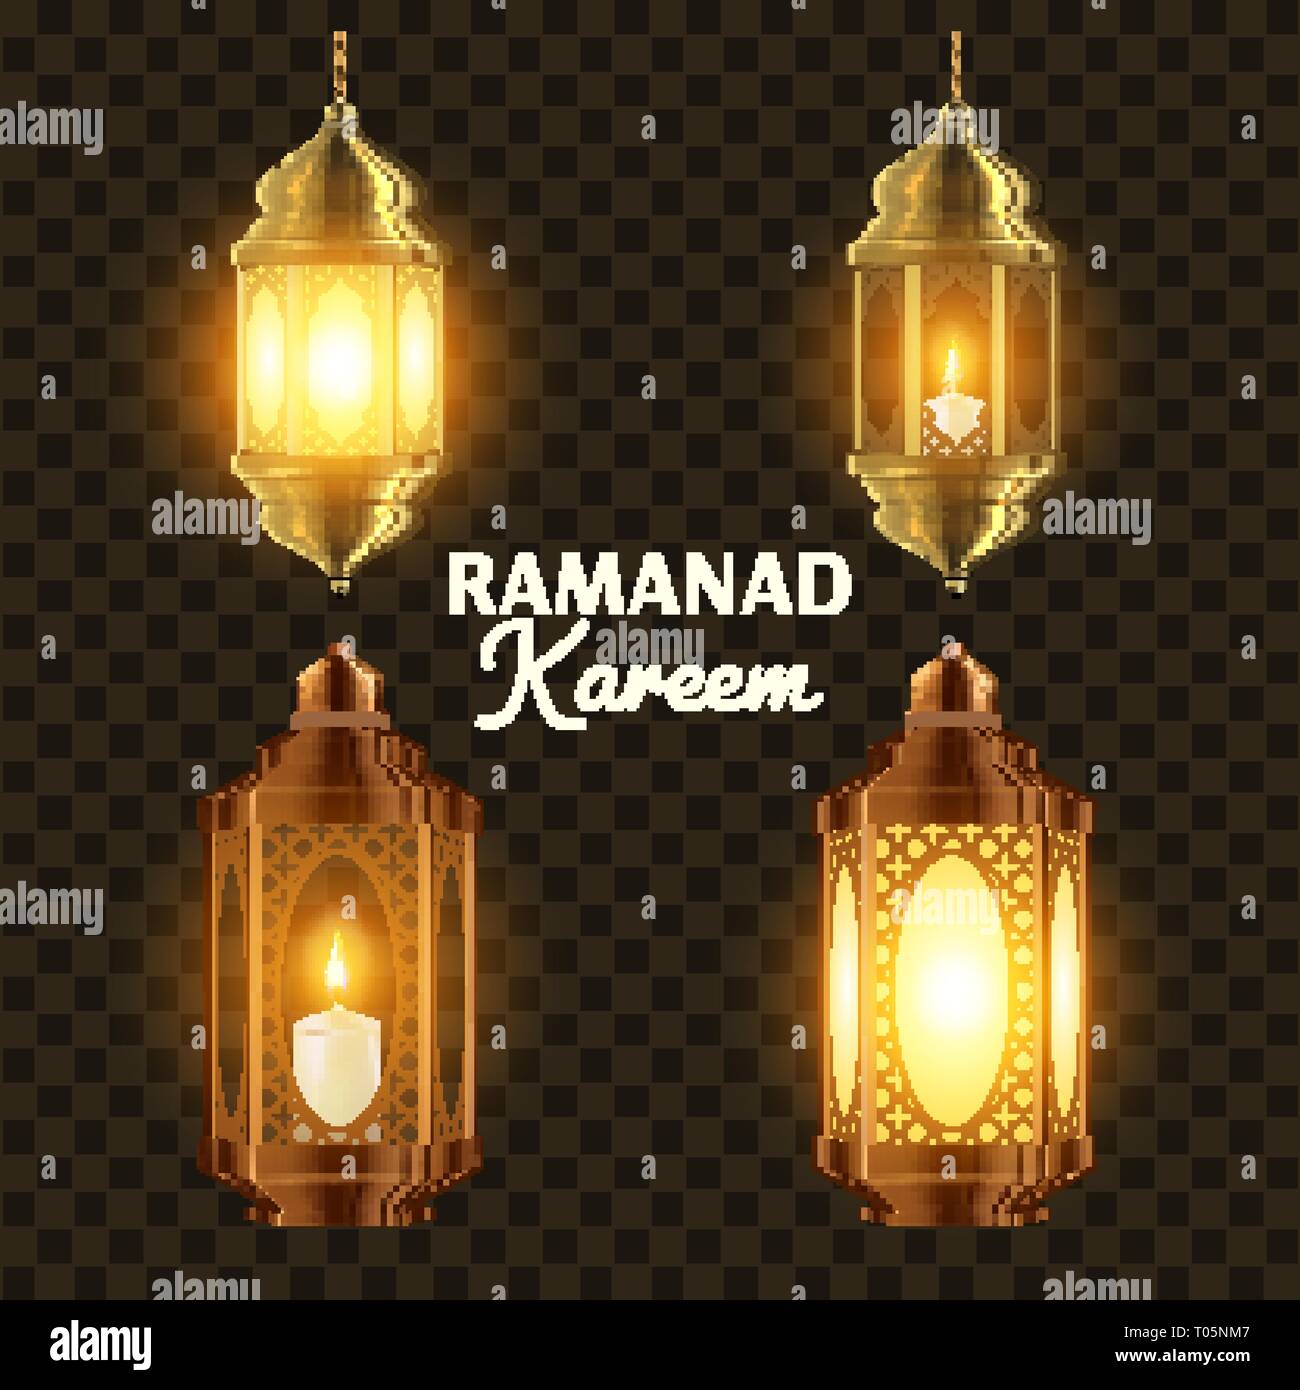 https://c8.alamy.com/compde/t05nm7/ramadan-lampe-set-vektor-islam-kareem-lampe-laterne-design-mubarak-nacht-ramazan-gruss-design-muslimische-fanous-fanoos-islamische-saison-einladung-t05nm7.jpg